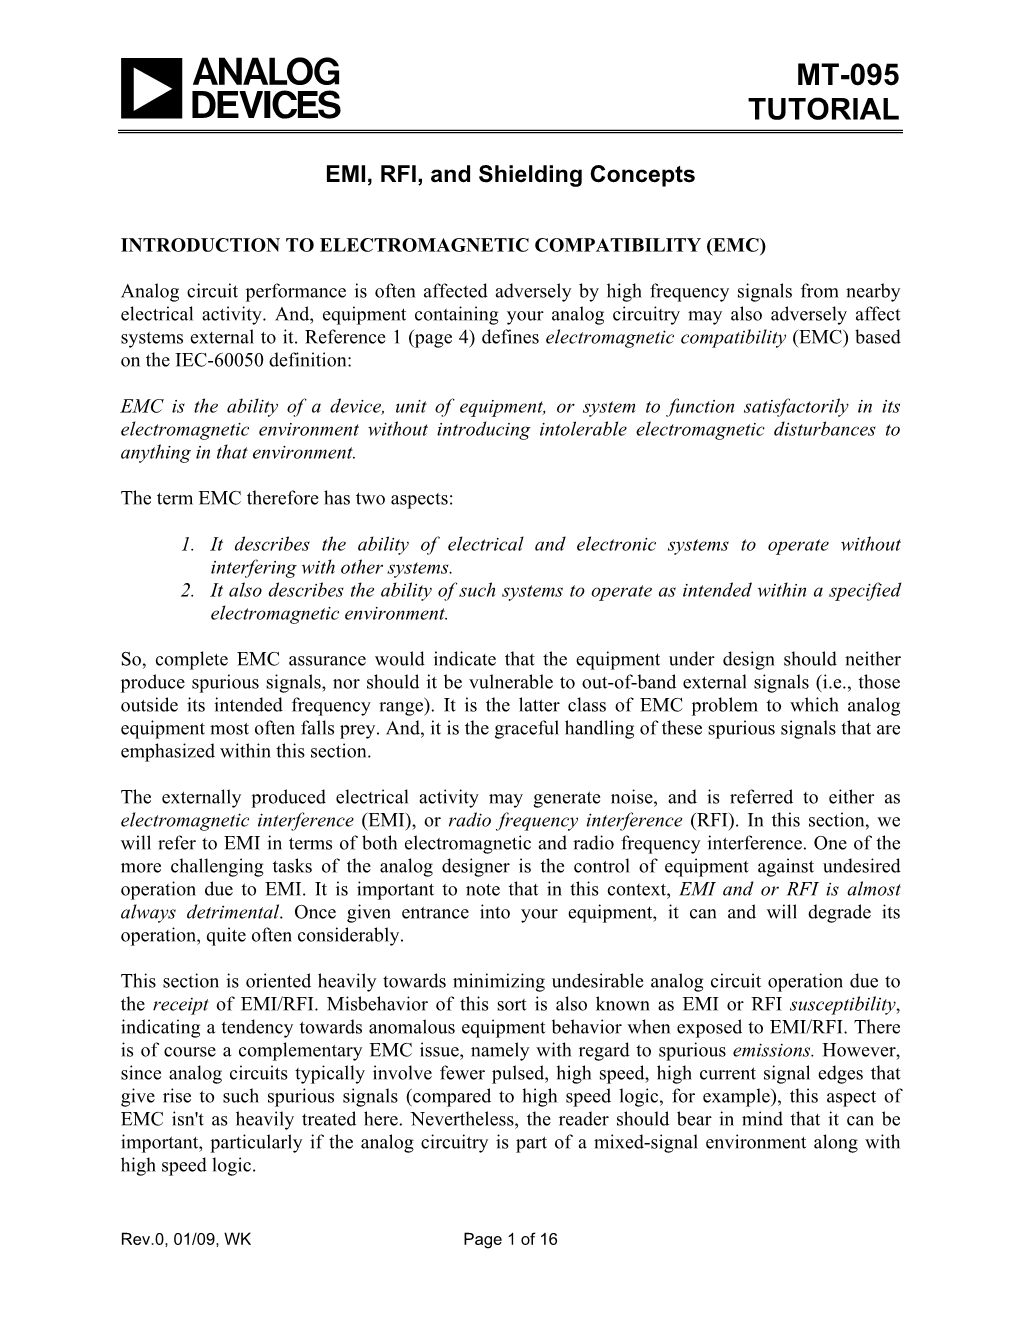 MT-095: EMI, RFI, and Shielding Concepts